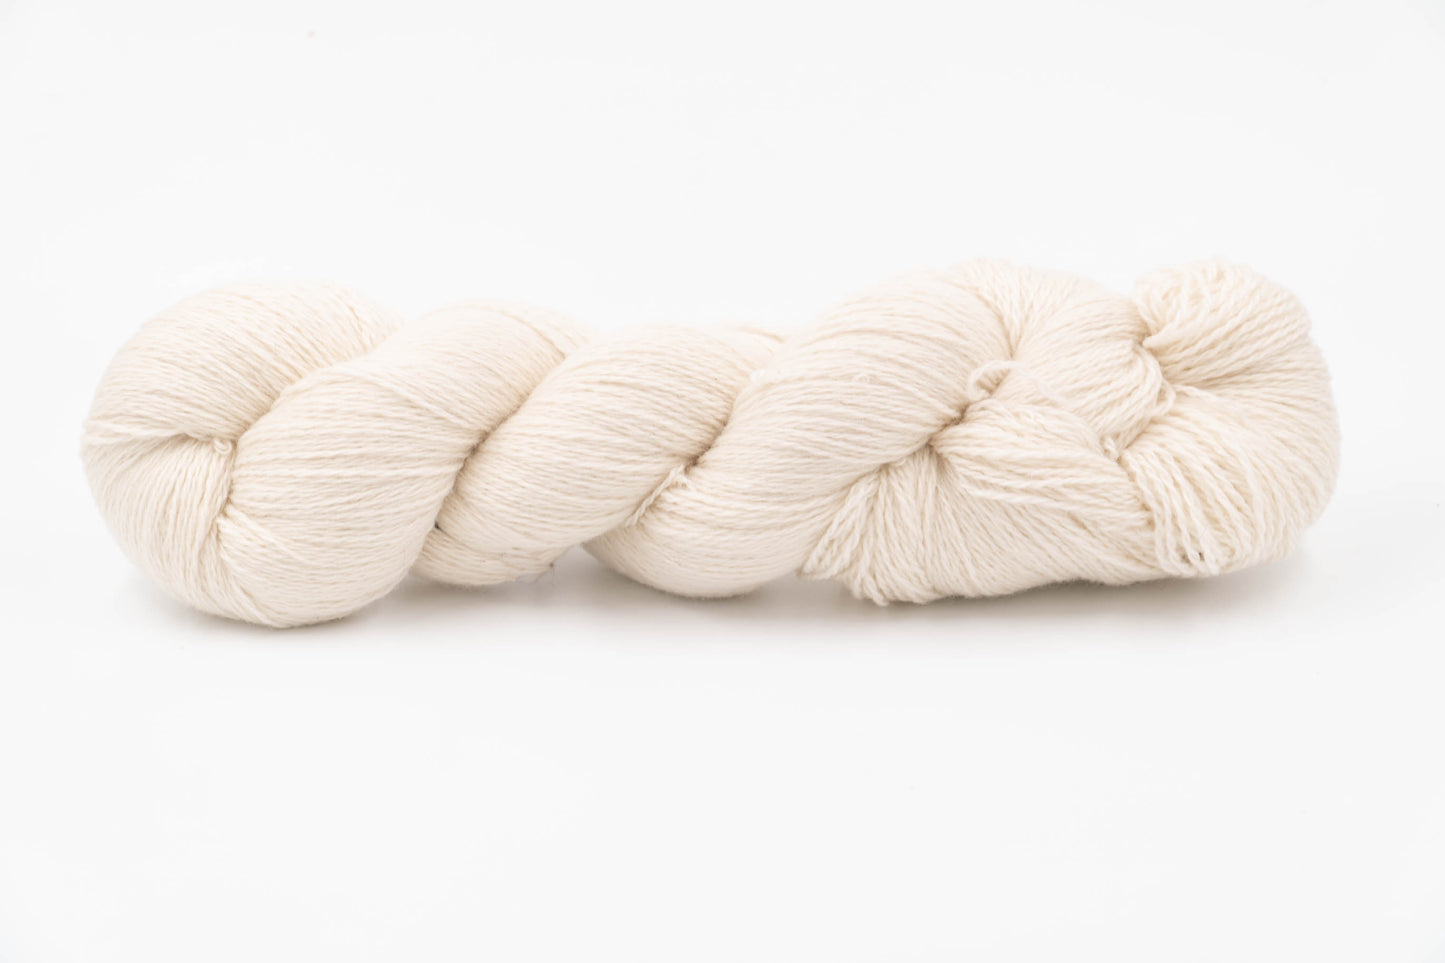 Sheep Wool/Cashmere Blend Yarn - Natural White - Fingering